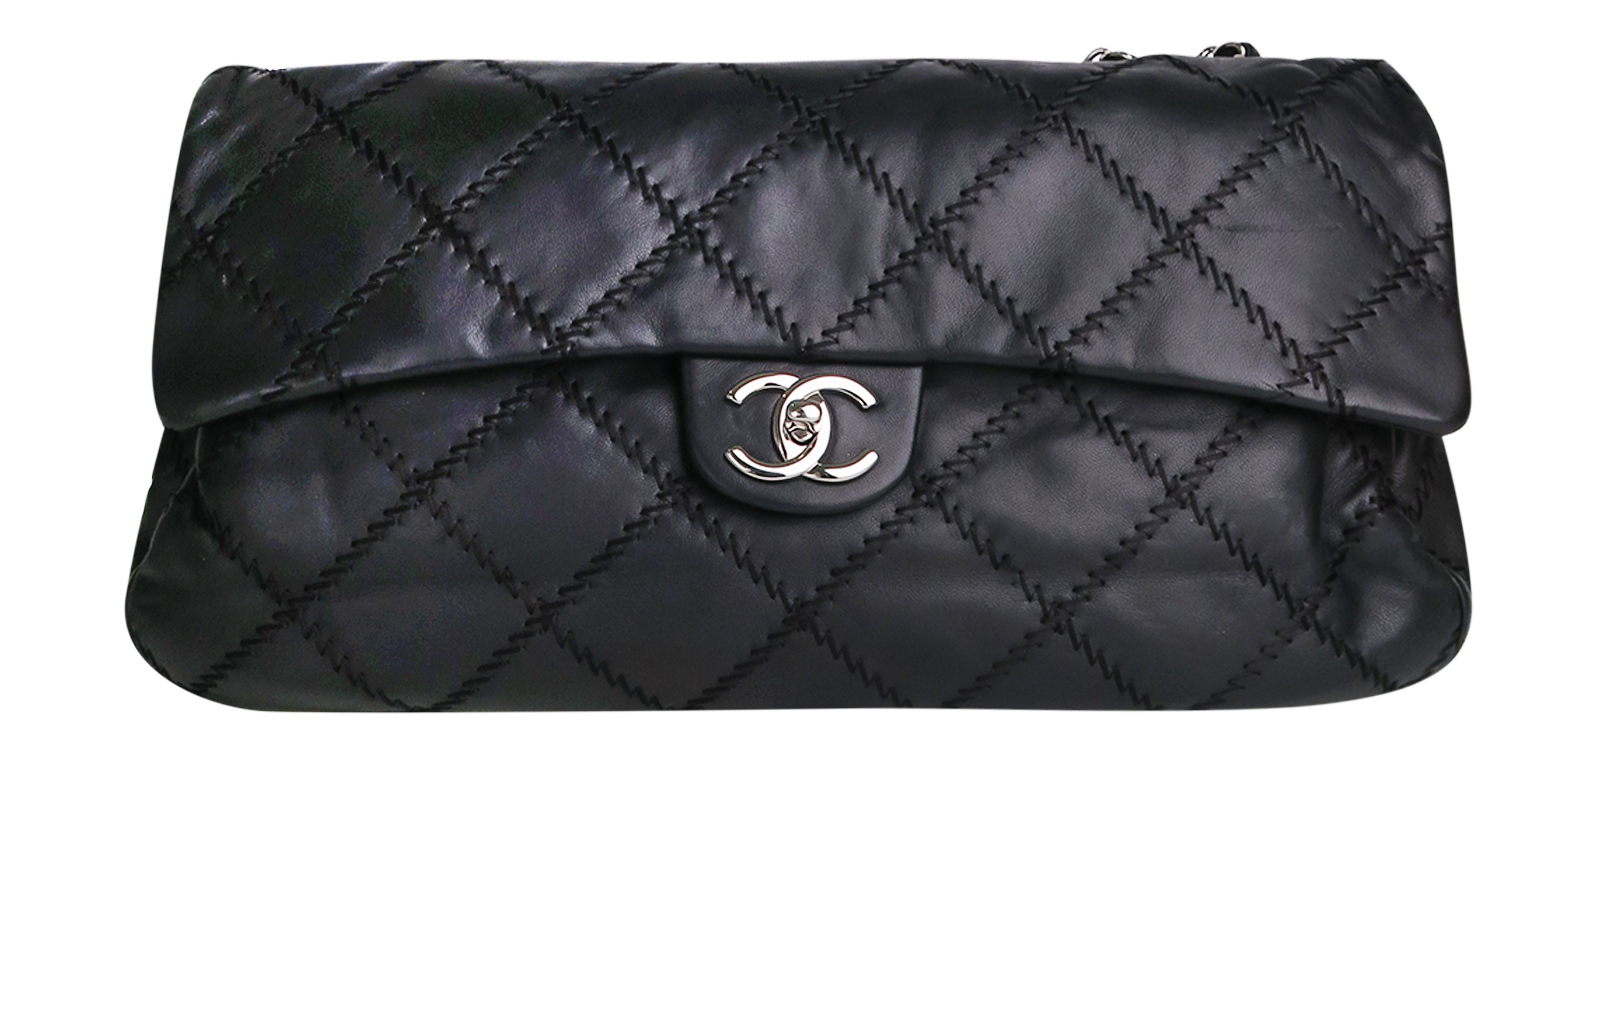 Chanel 2010 Ultimate Stitch Flap Bag